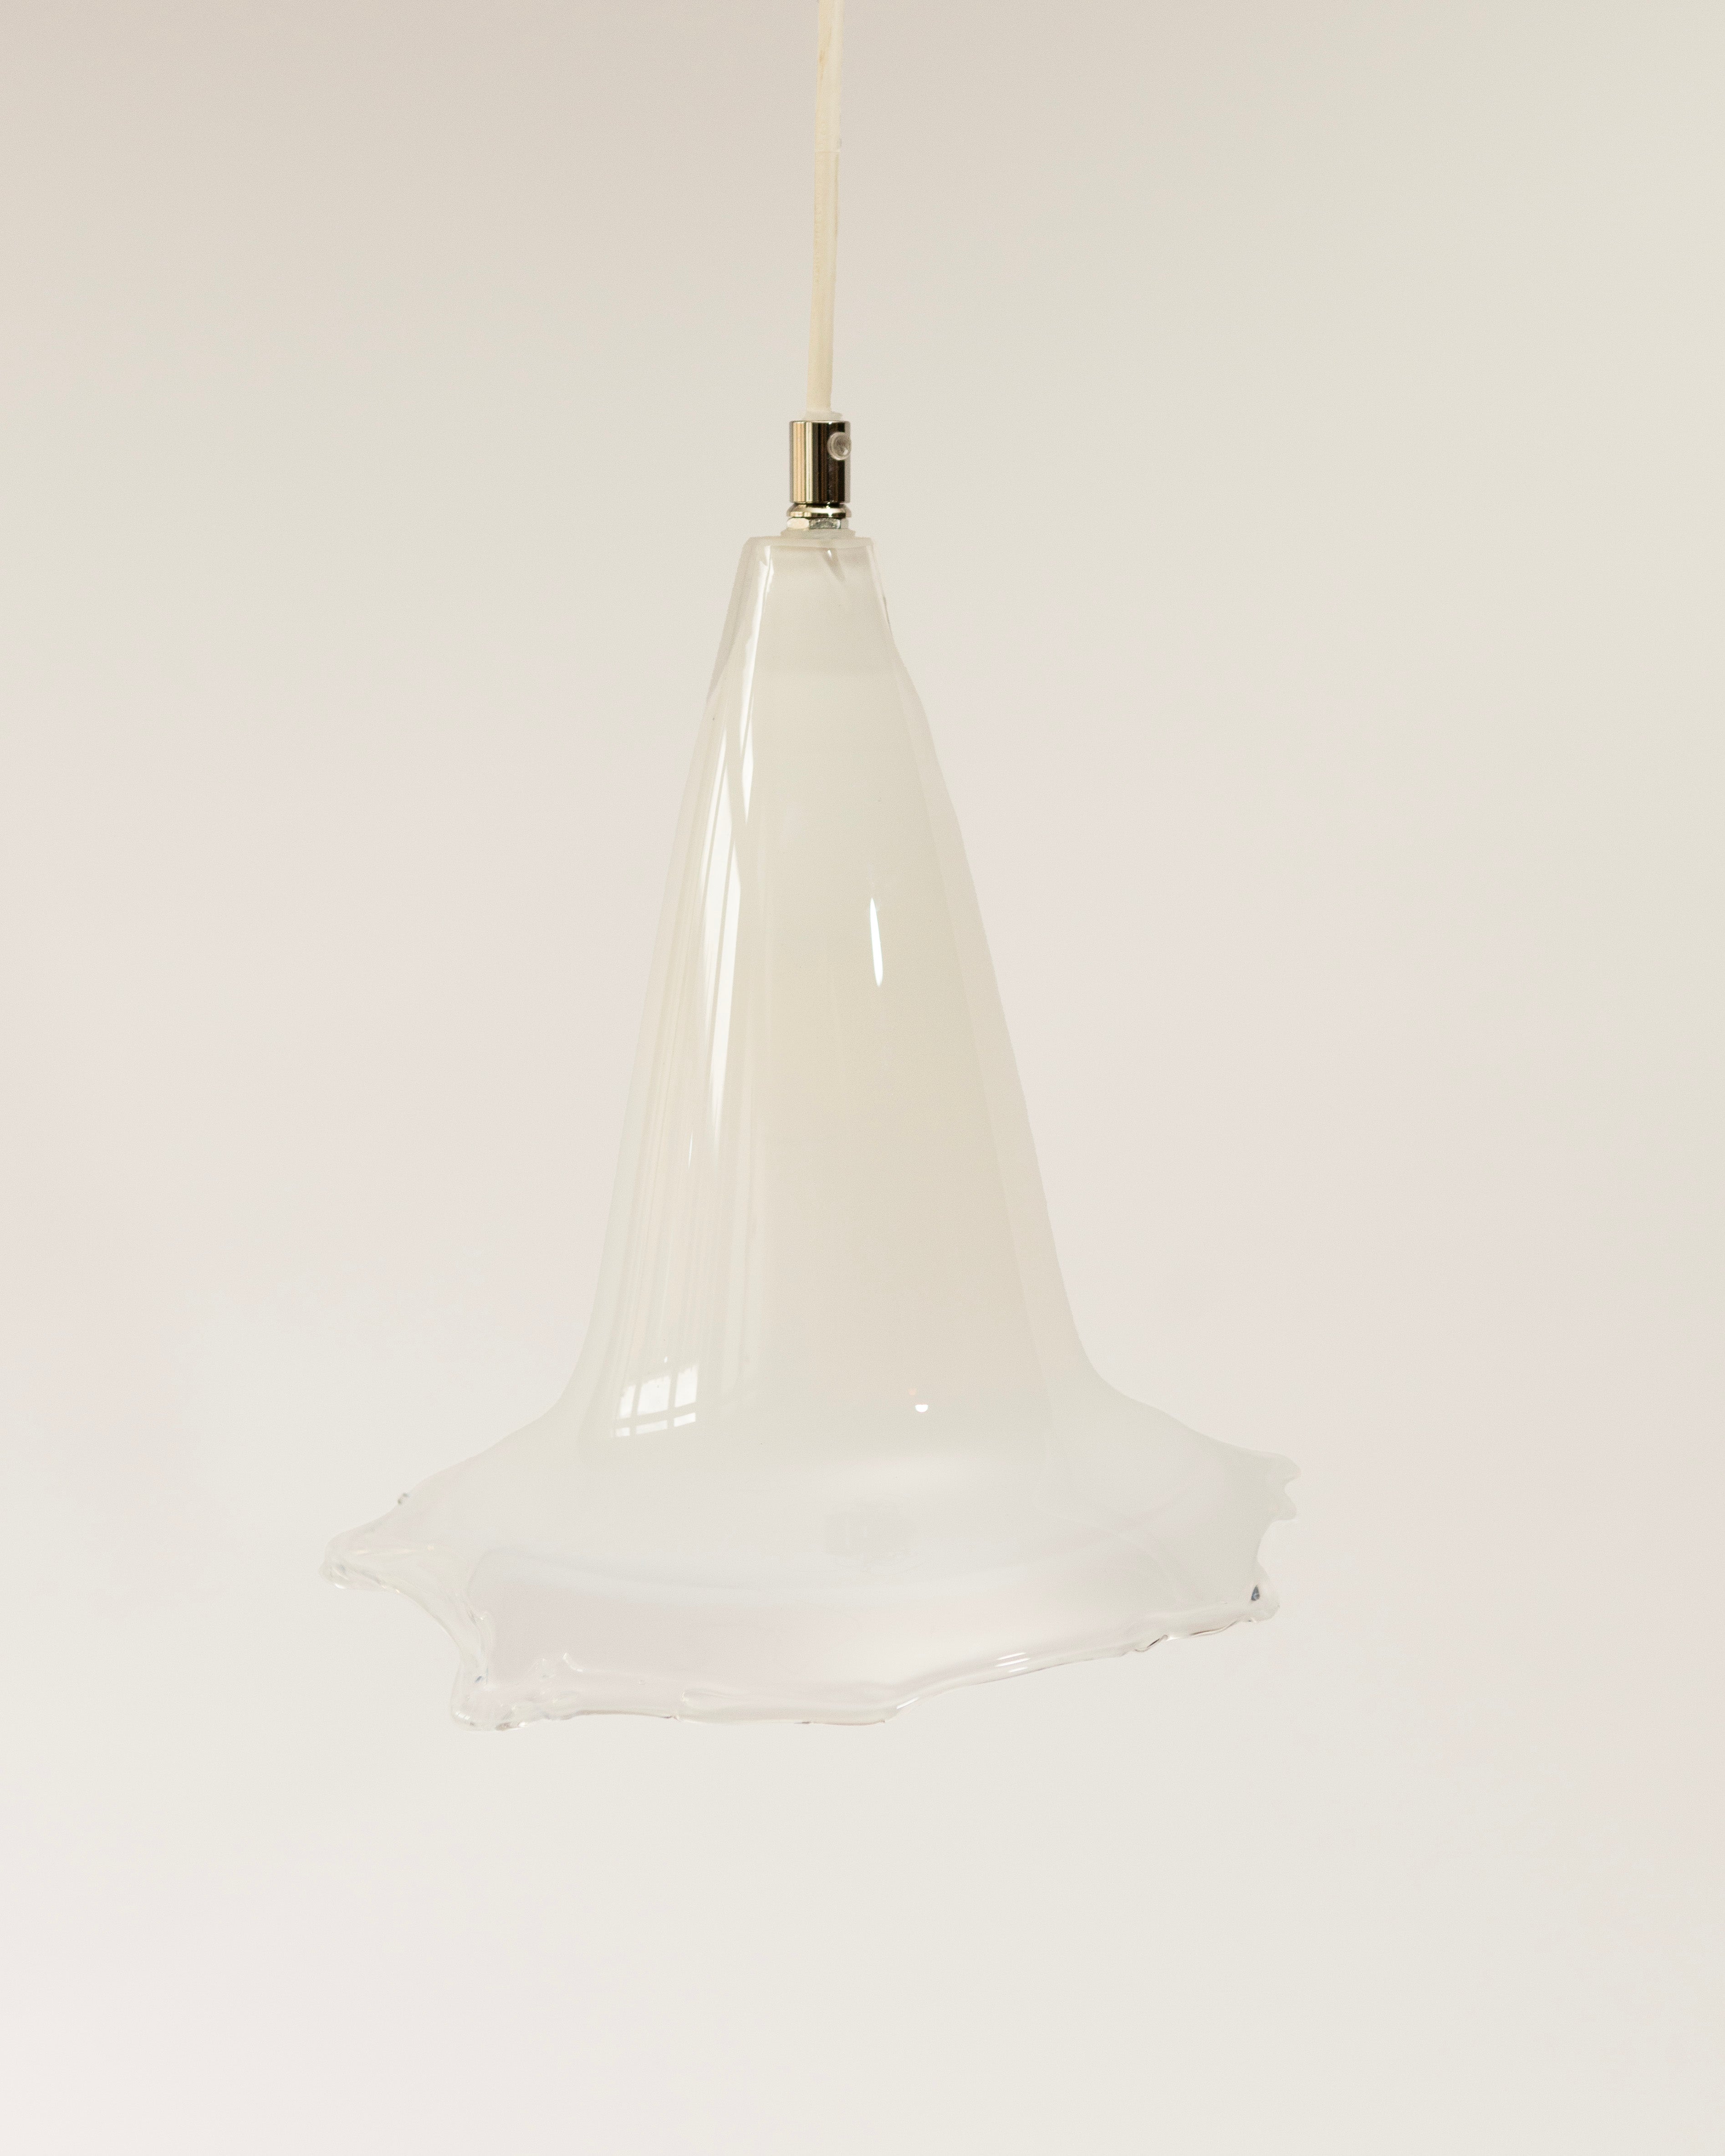 M. BREYEN: LAMP